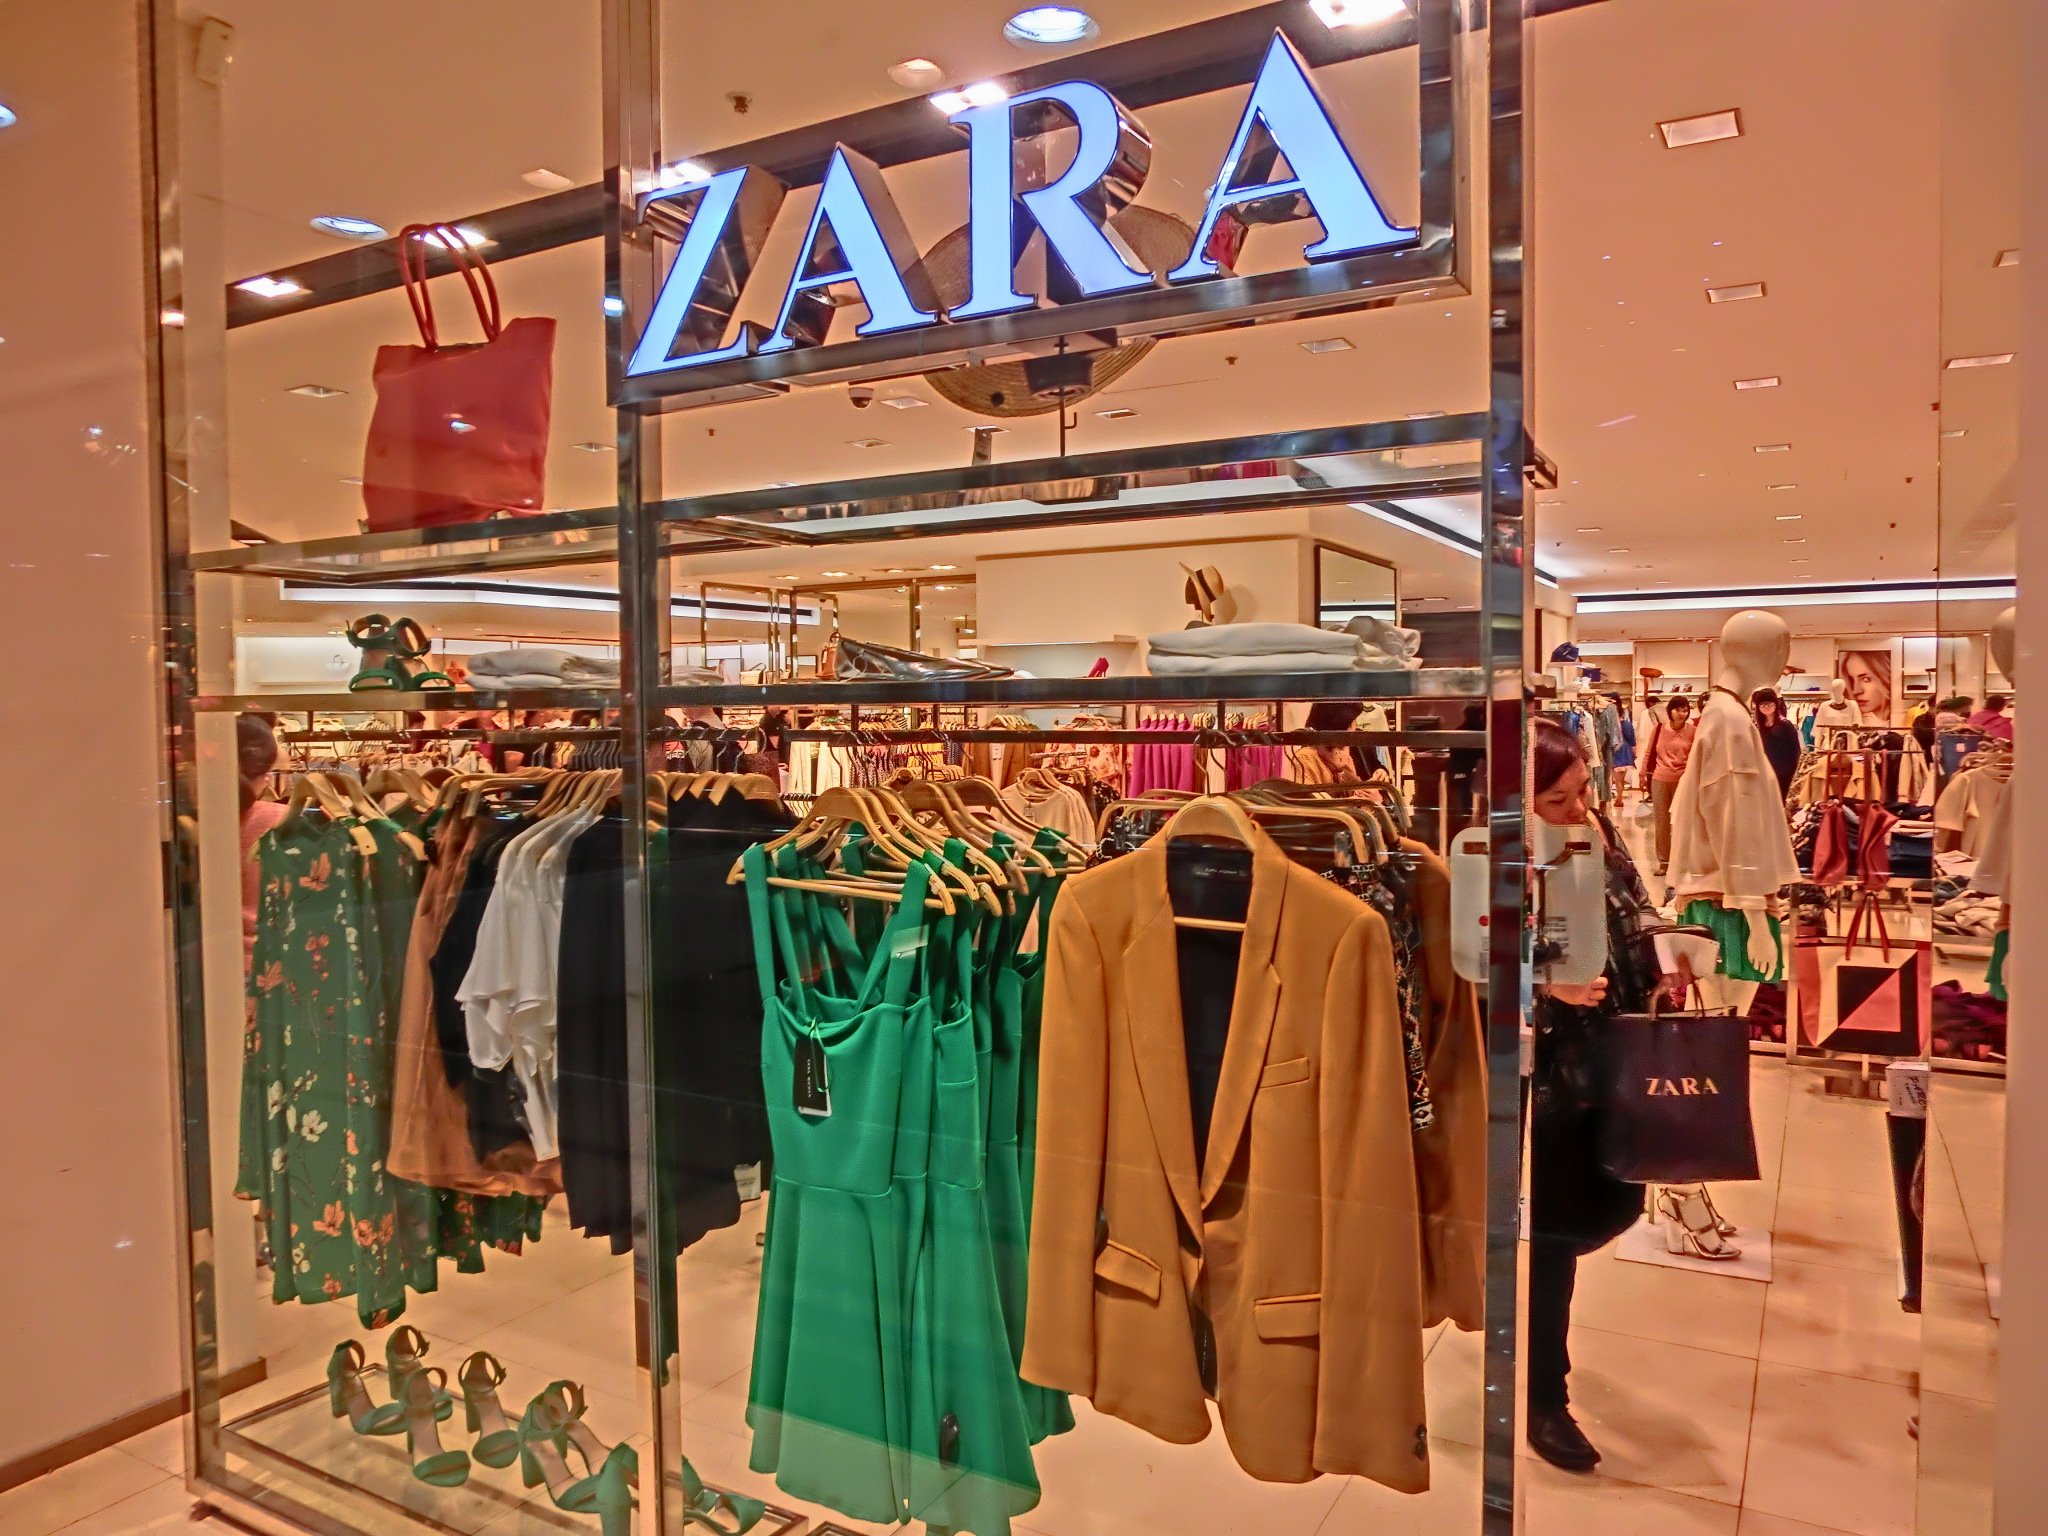 Zara-shop-front2